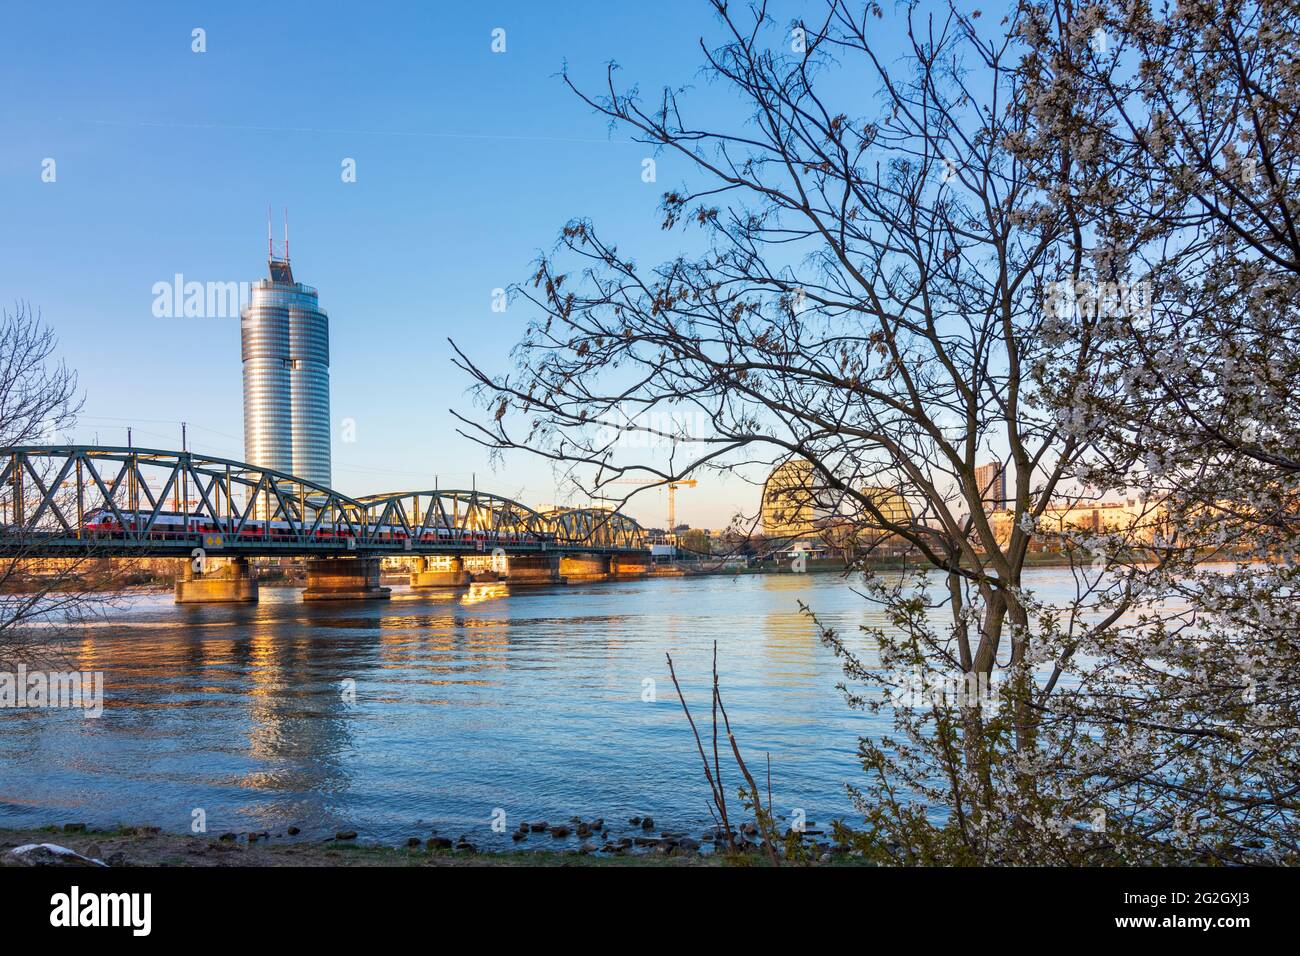 Wien, Vienna, fiume Donau (Danubio), ponte Nordbahnbrücke, treno locale, Millennium Tower nel 20. Brigittenau, Vienna, Austria Foto Stock